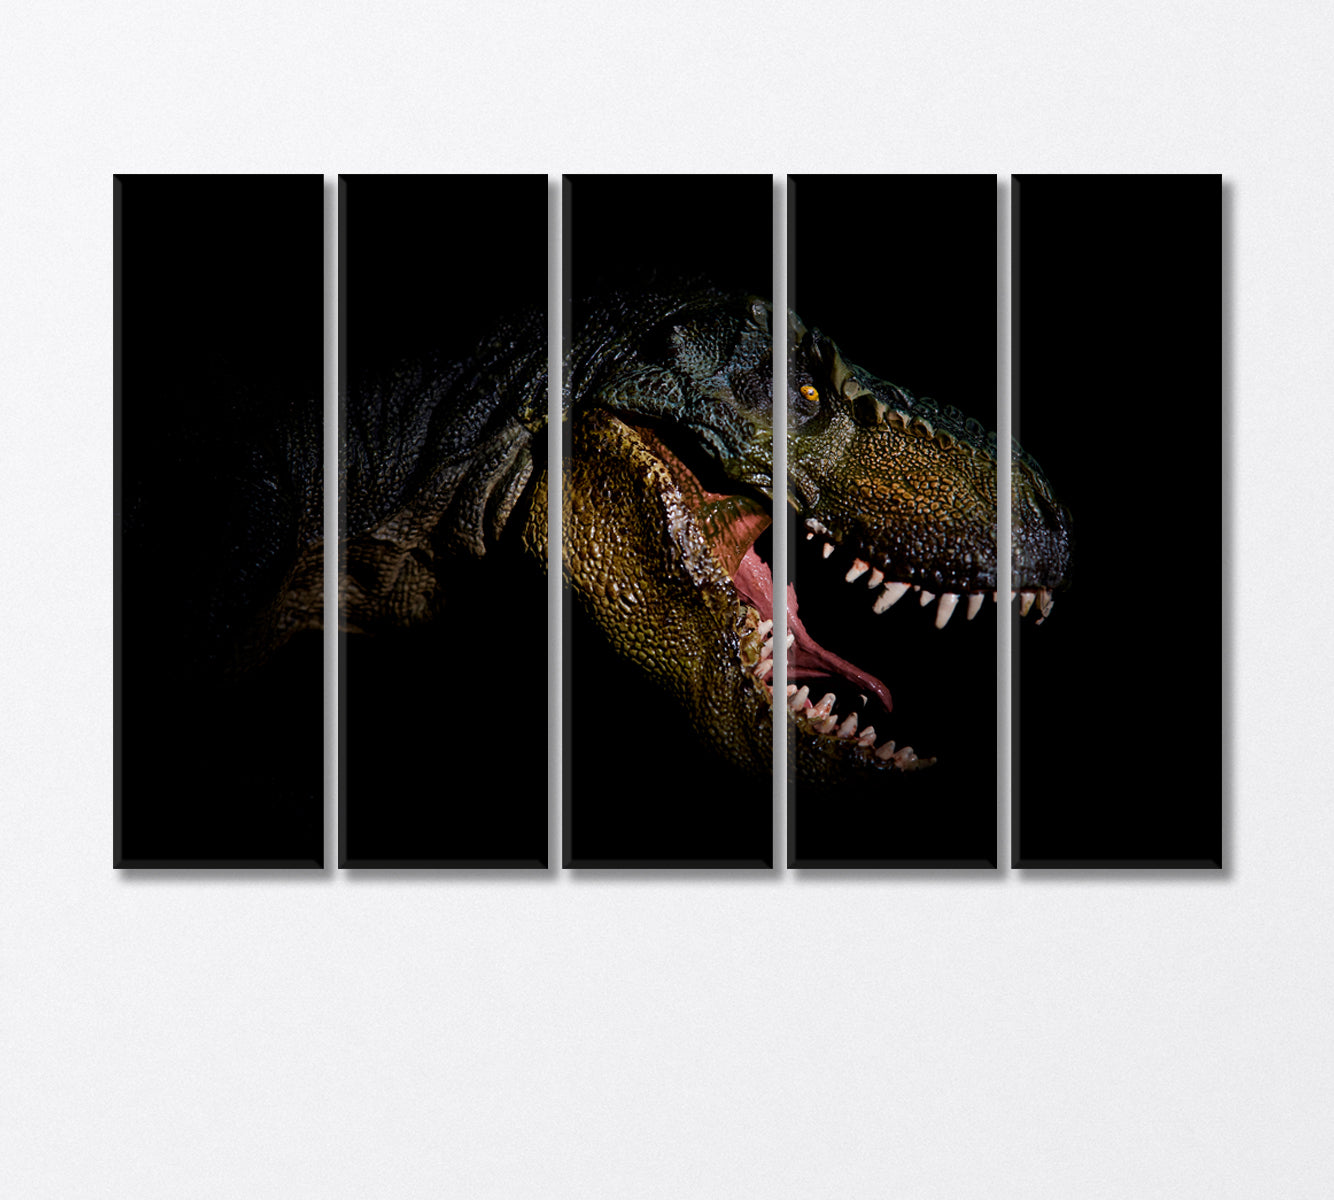 Dinosaur Head in the Dark Canvas Print-Canvas Print-CetArt-5 Panels-36x24 inches-CetArt